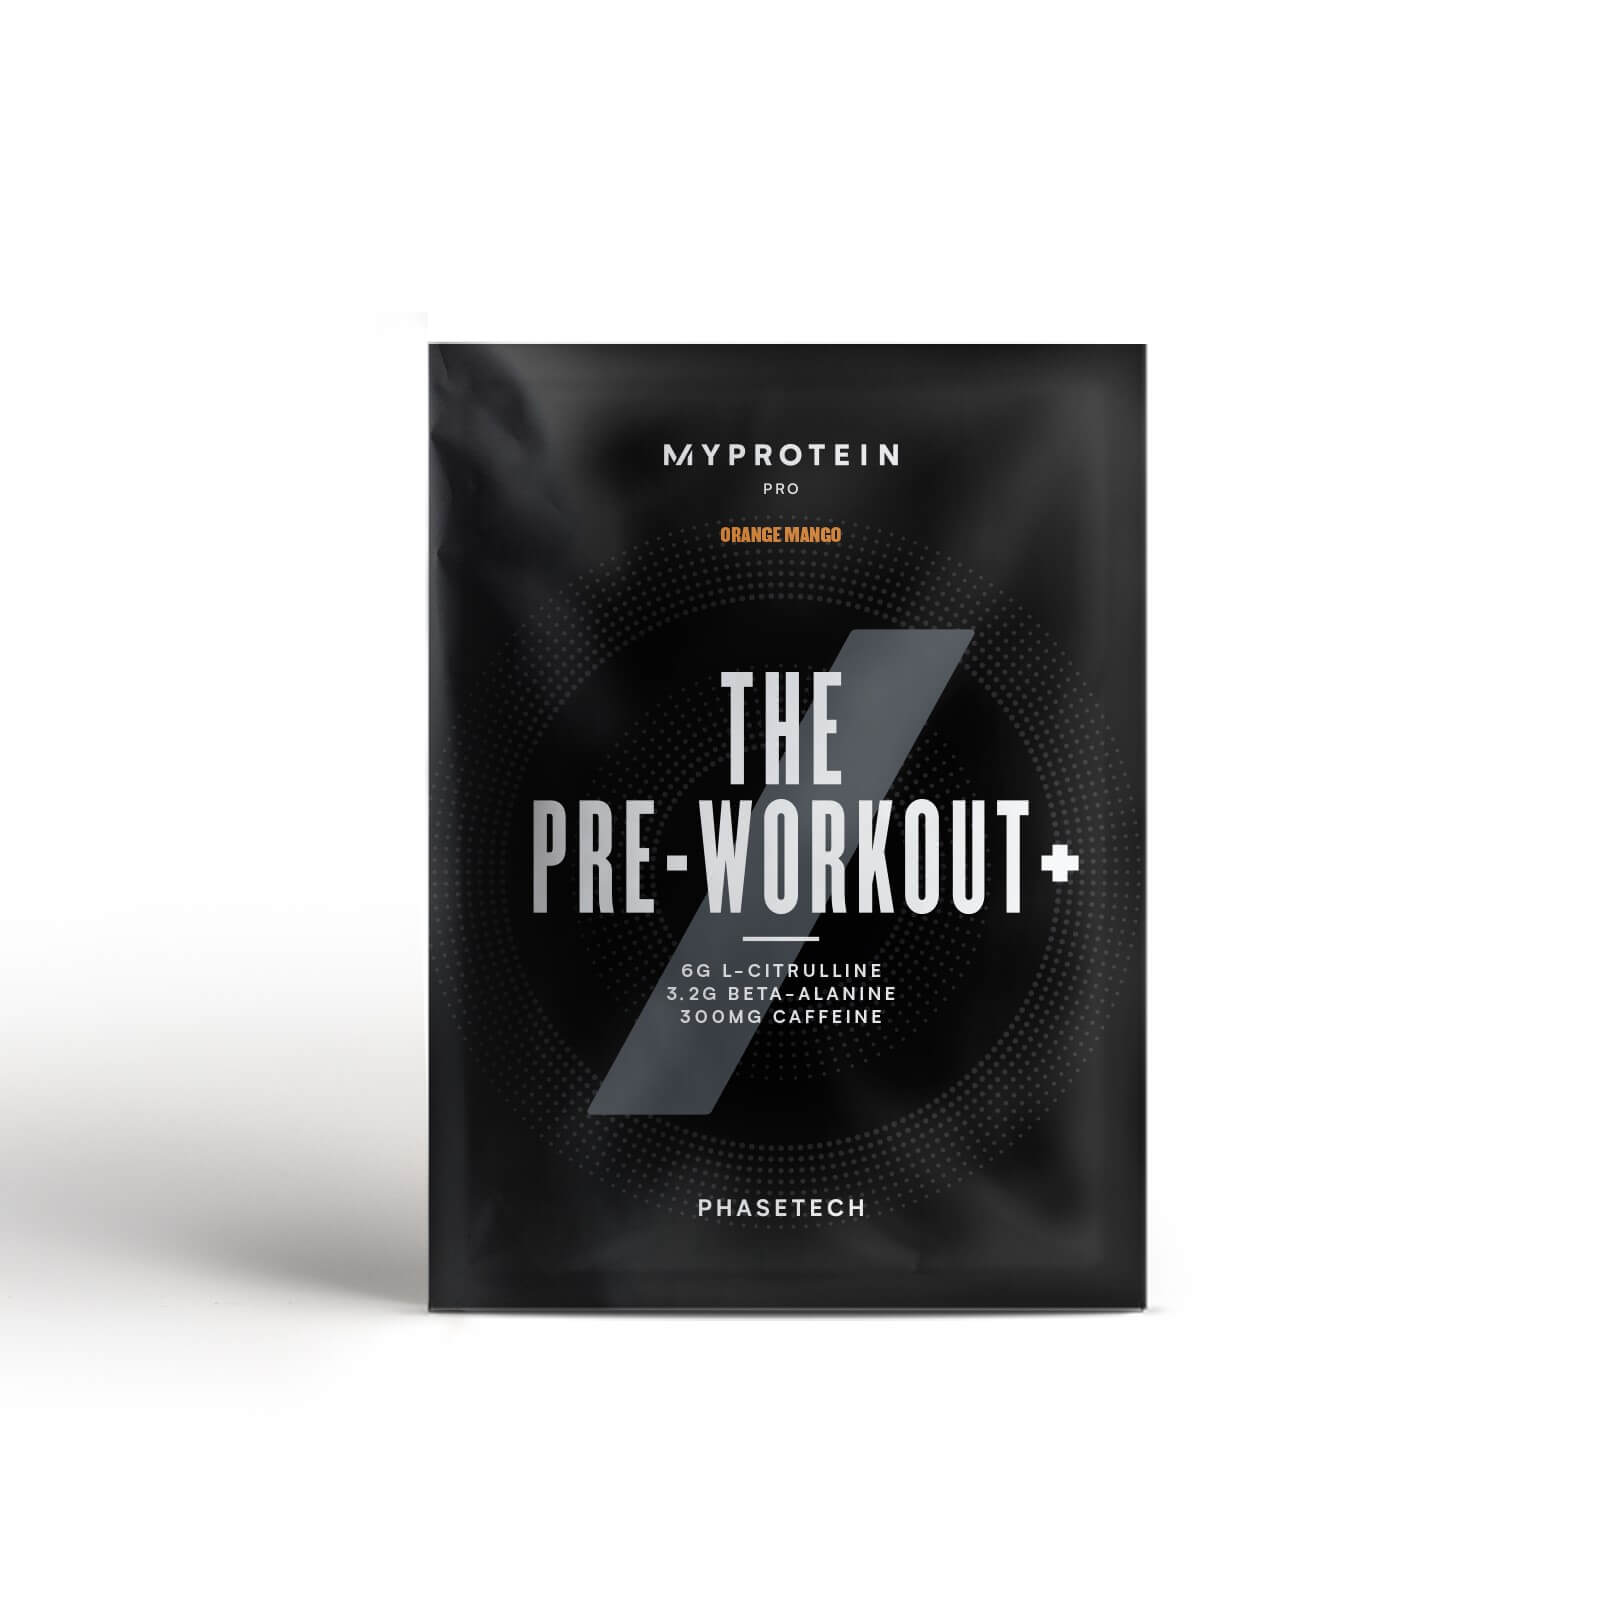 THE Pre-Workout+ (Sample) - Orange Mango